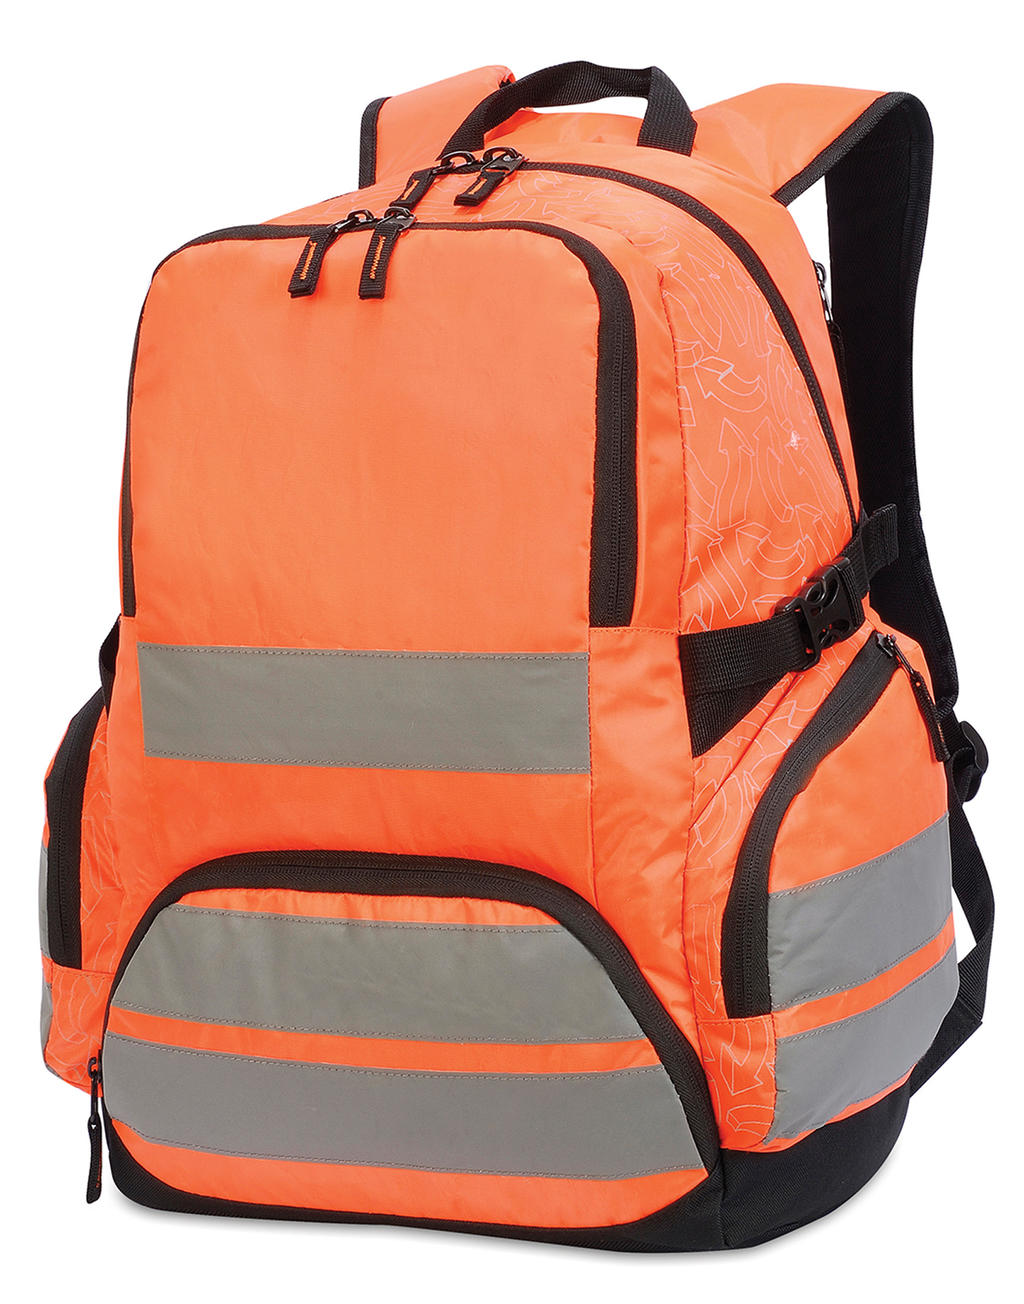  London Hi-Vis Backpack  in Farbe Hi-Vis Orange